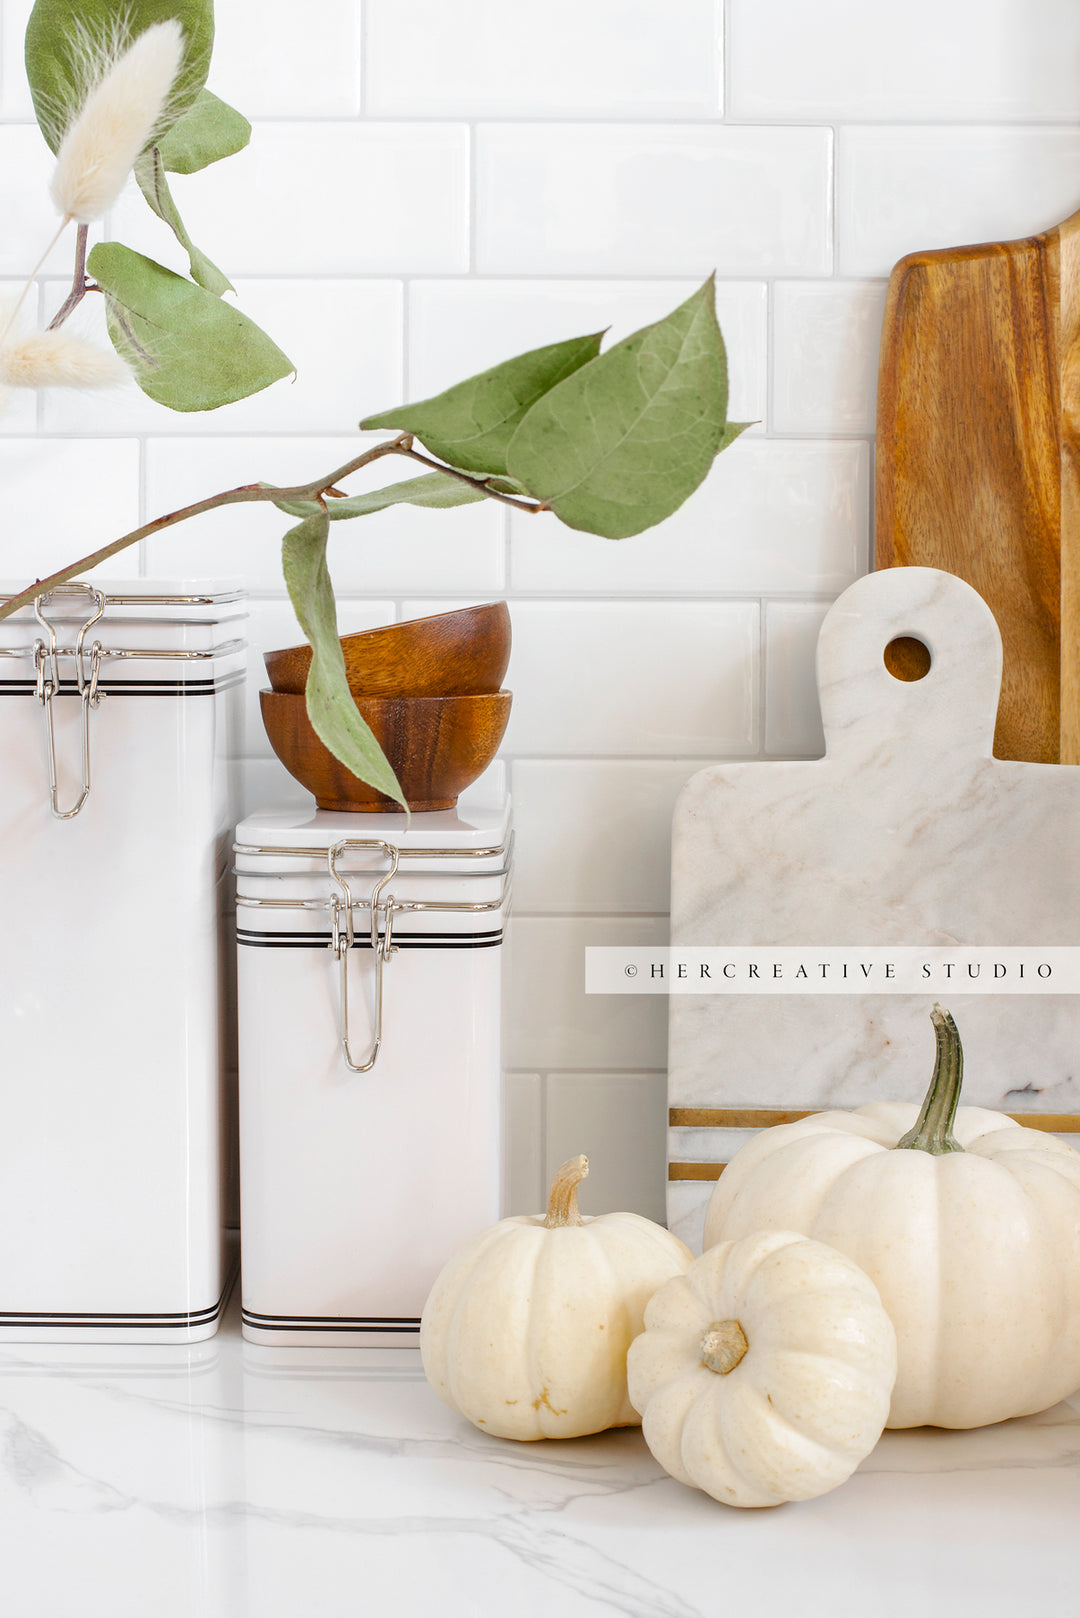 White Pumpkins in Kitchen. Digital Stock Image.